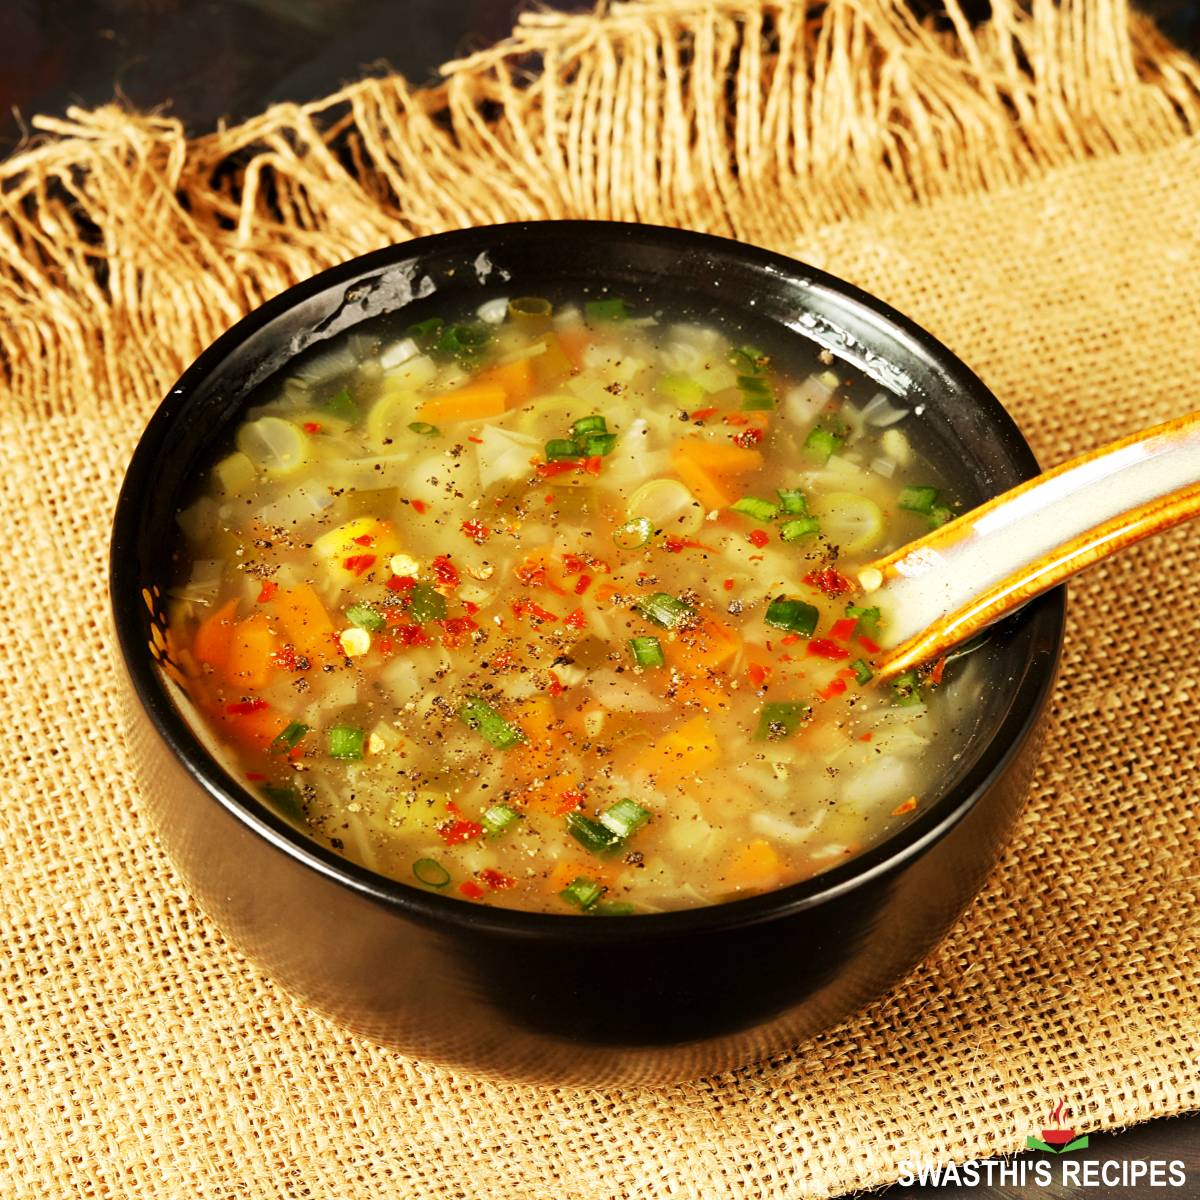 https://www.indianhealthyrecipes.com/wp-content/uploads/2021/08/vegetable-soup-recipe.jpg